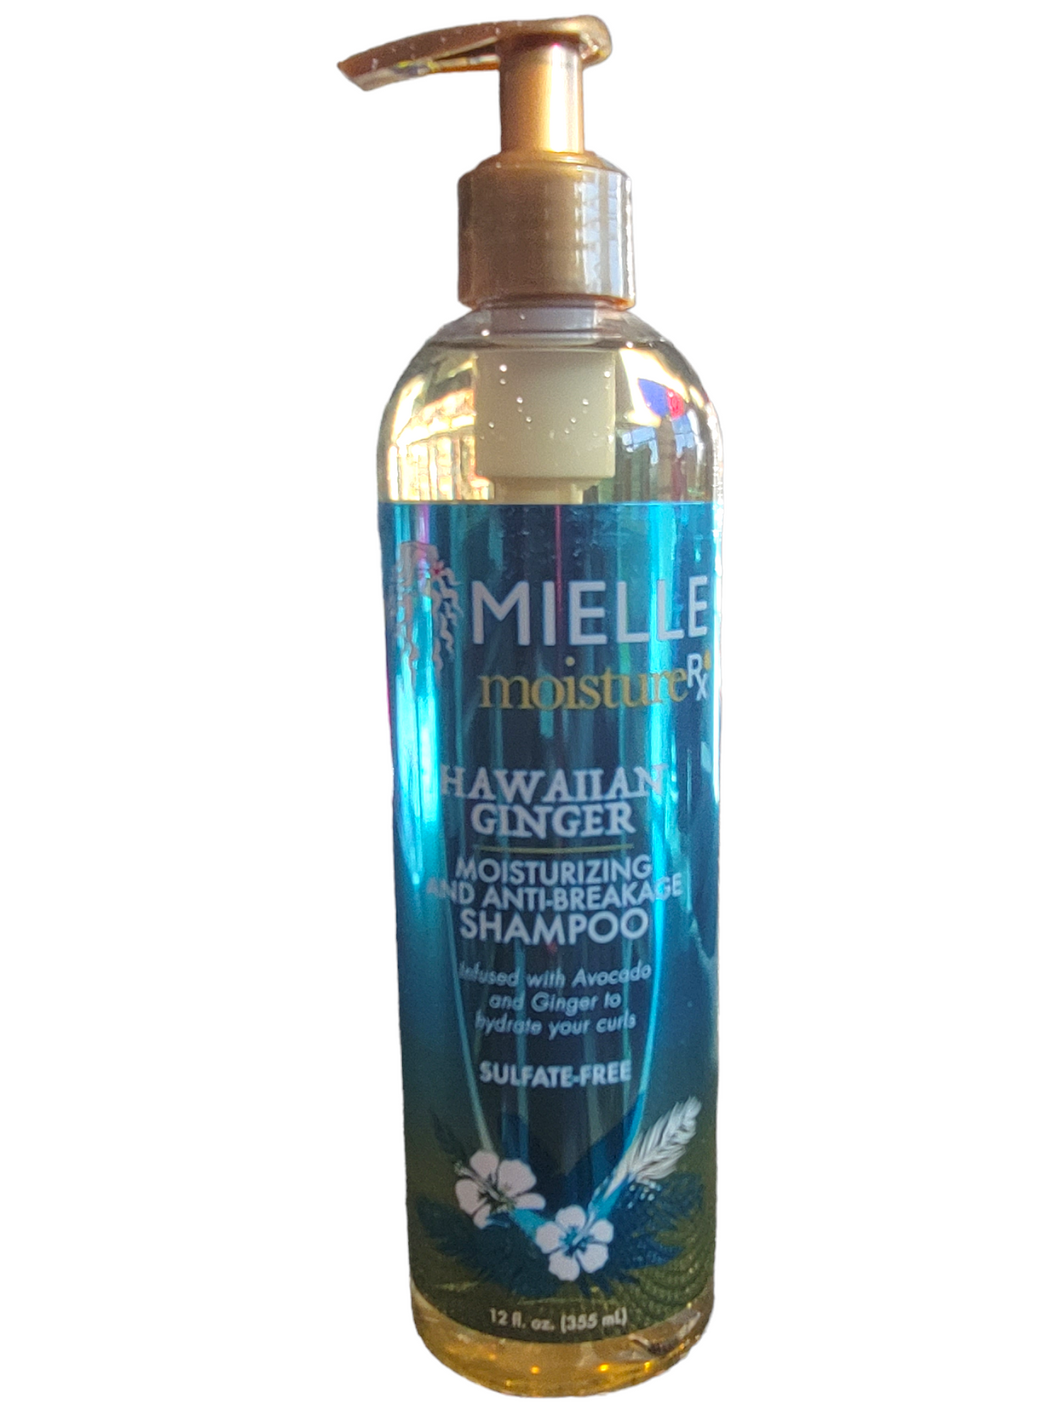 Mielle Moisture Rx Hawaiian Ginger Moisturizing & Anti-Breakage Shampoo